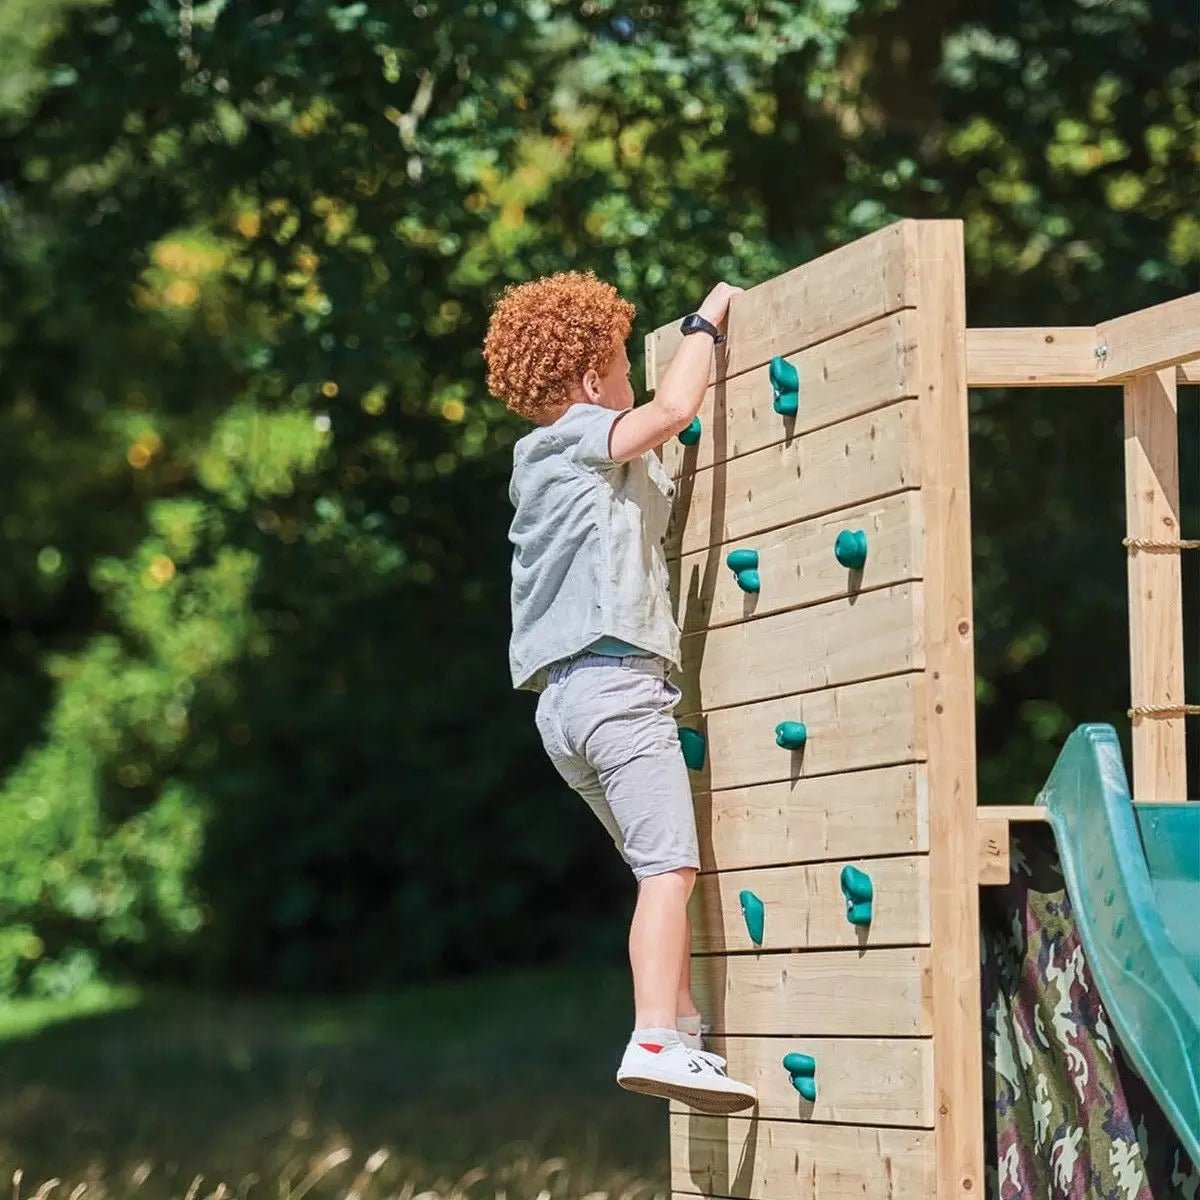 Plum Climbing Cube Play Centre: Building Memories Through Play